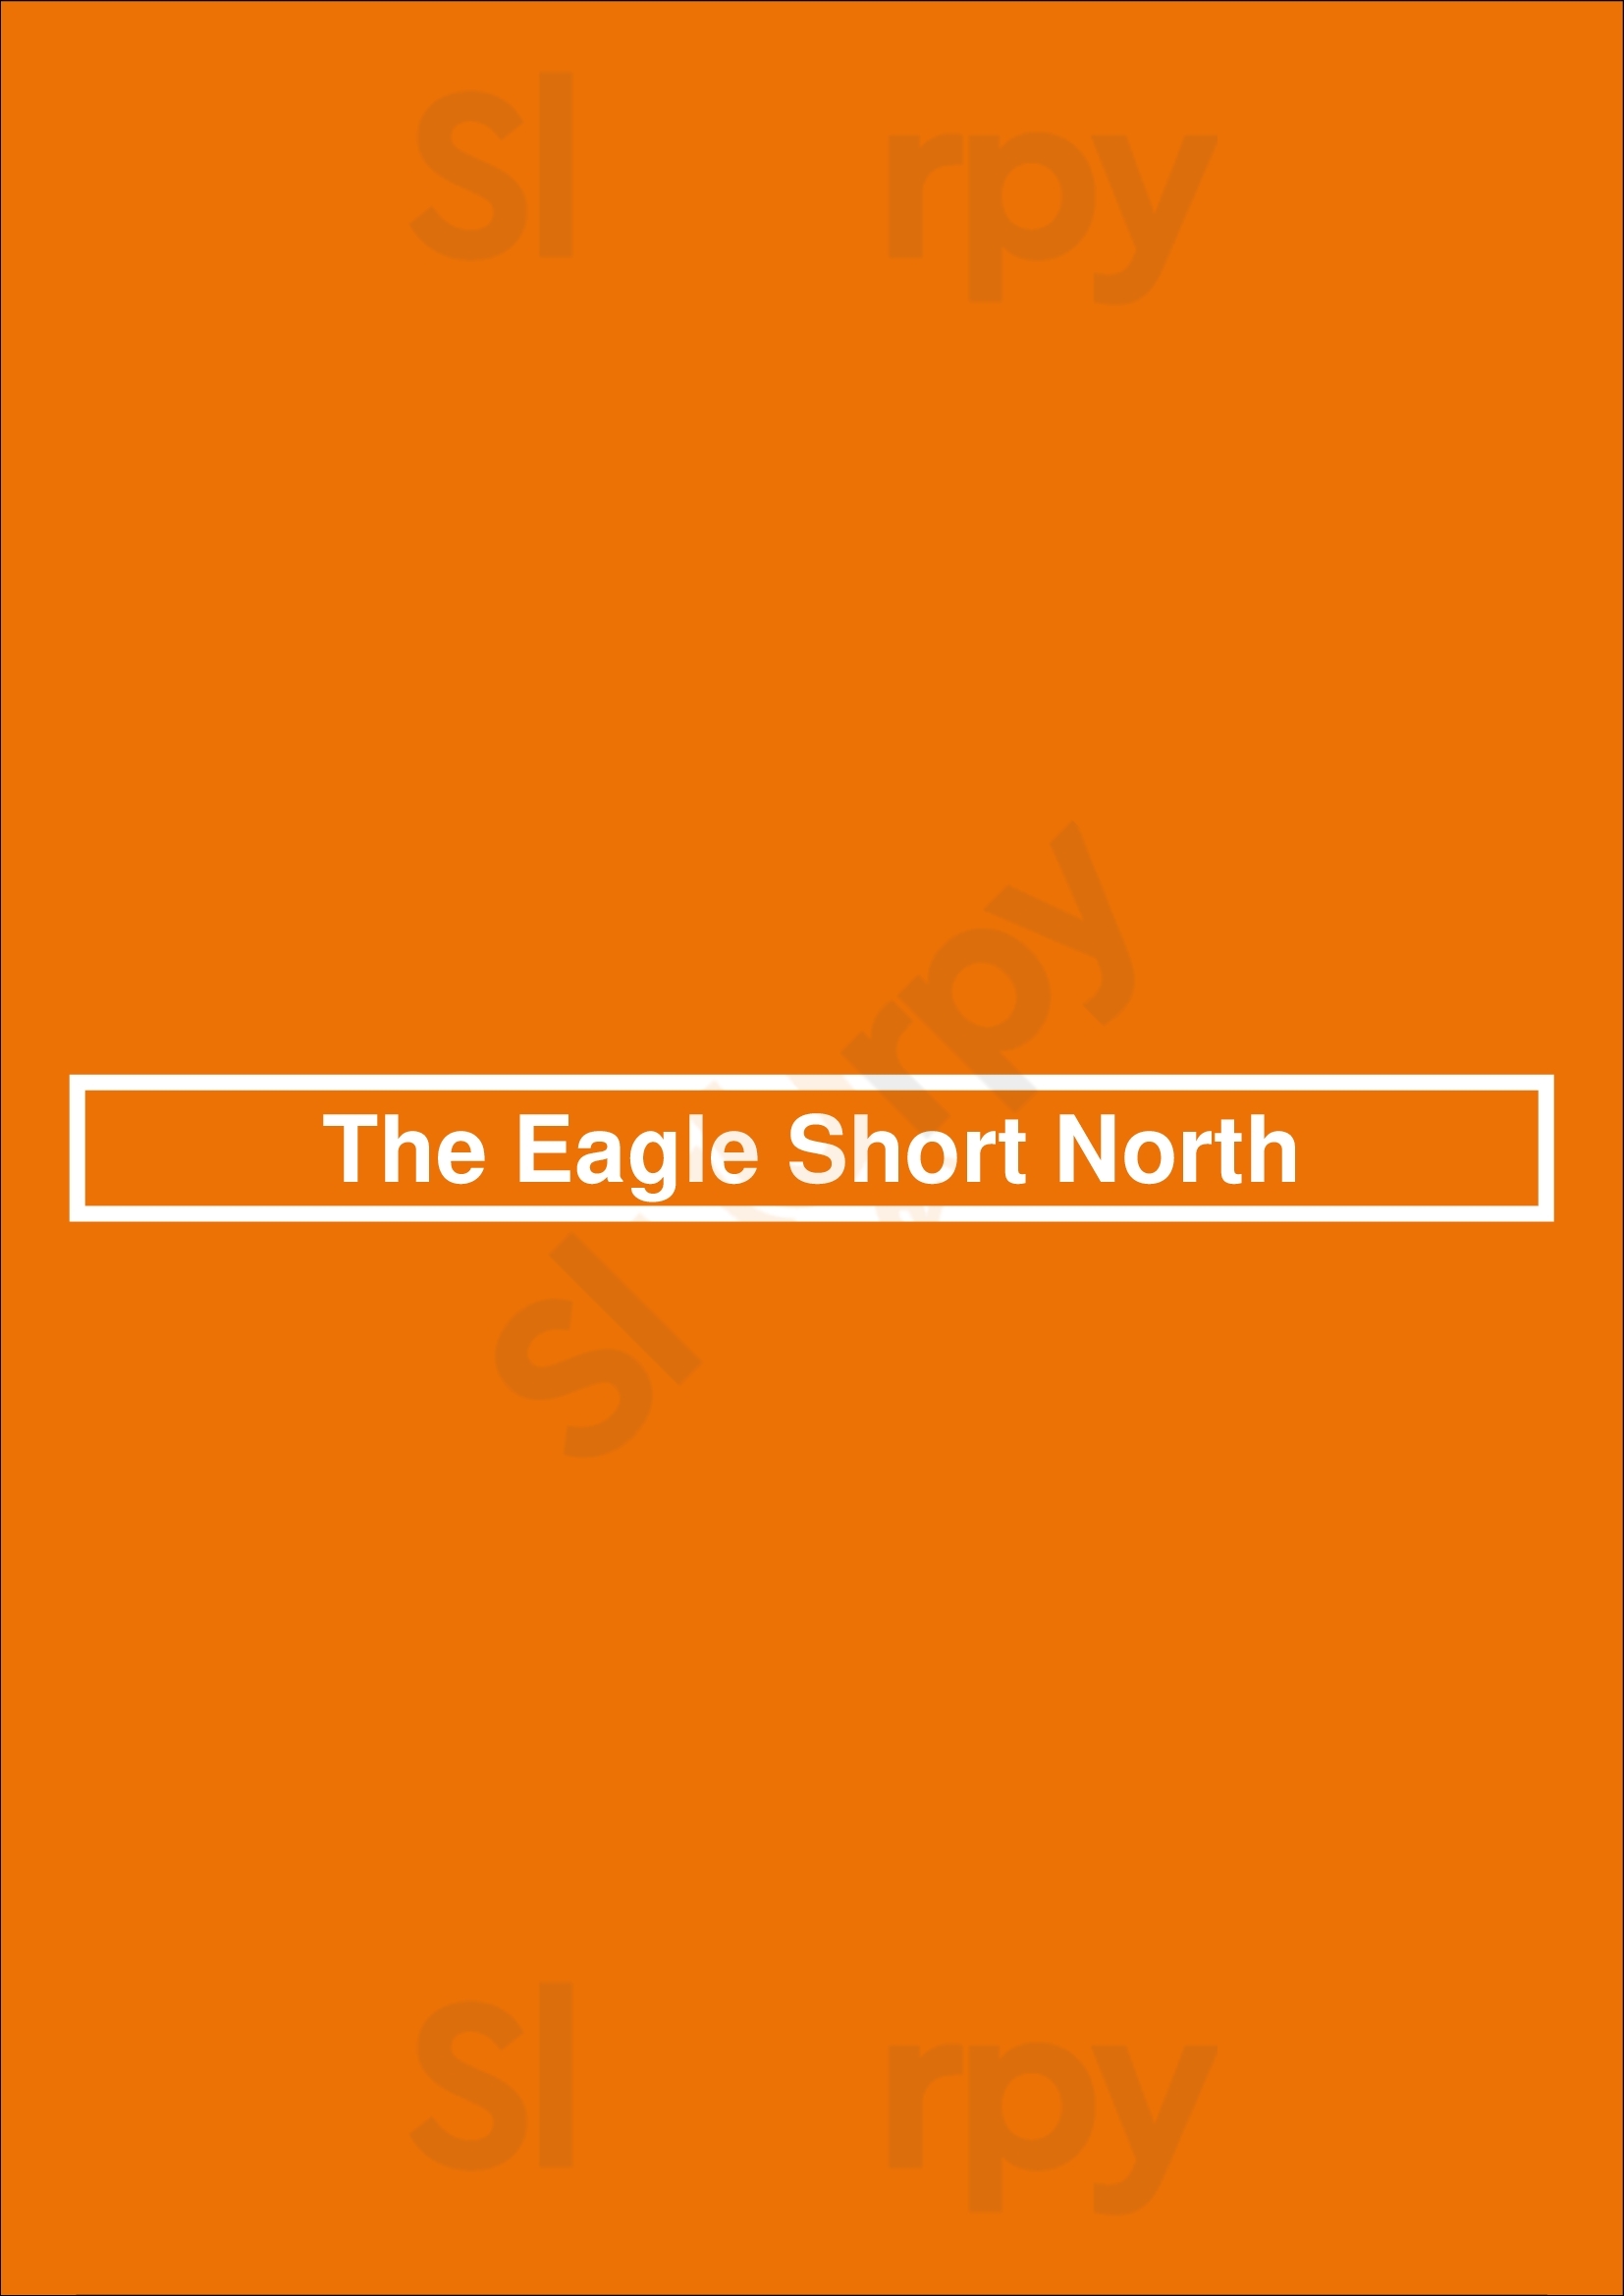 The Eagle Short North Columbus Menu - 1